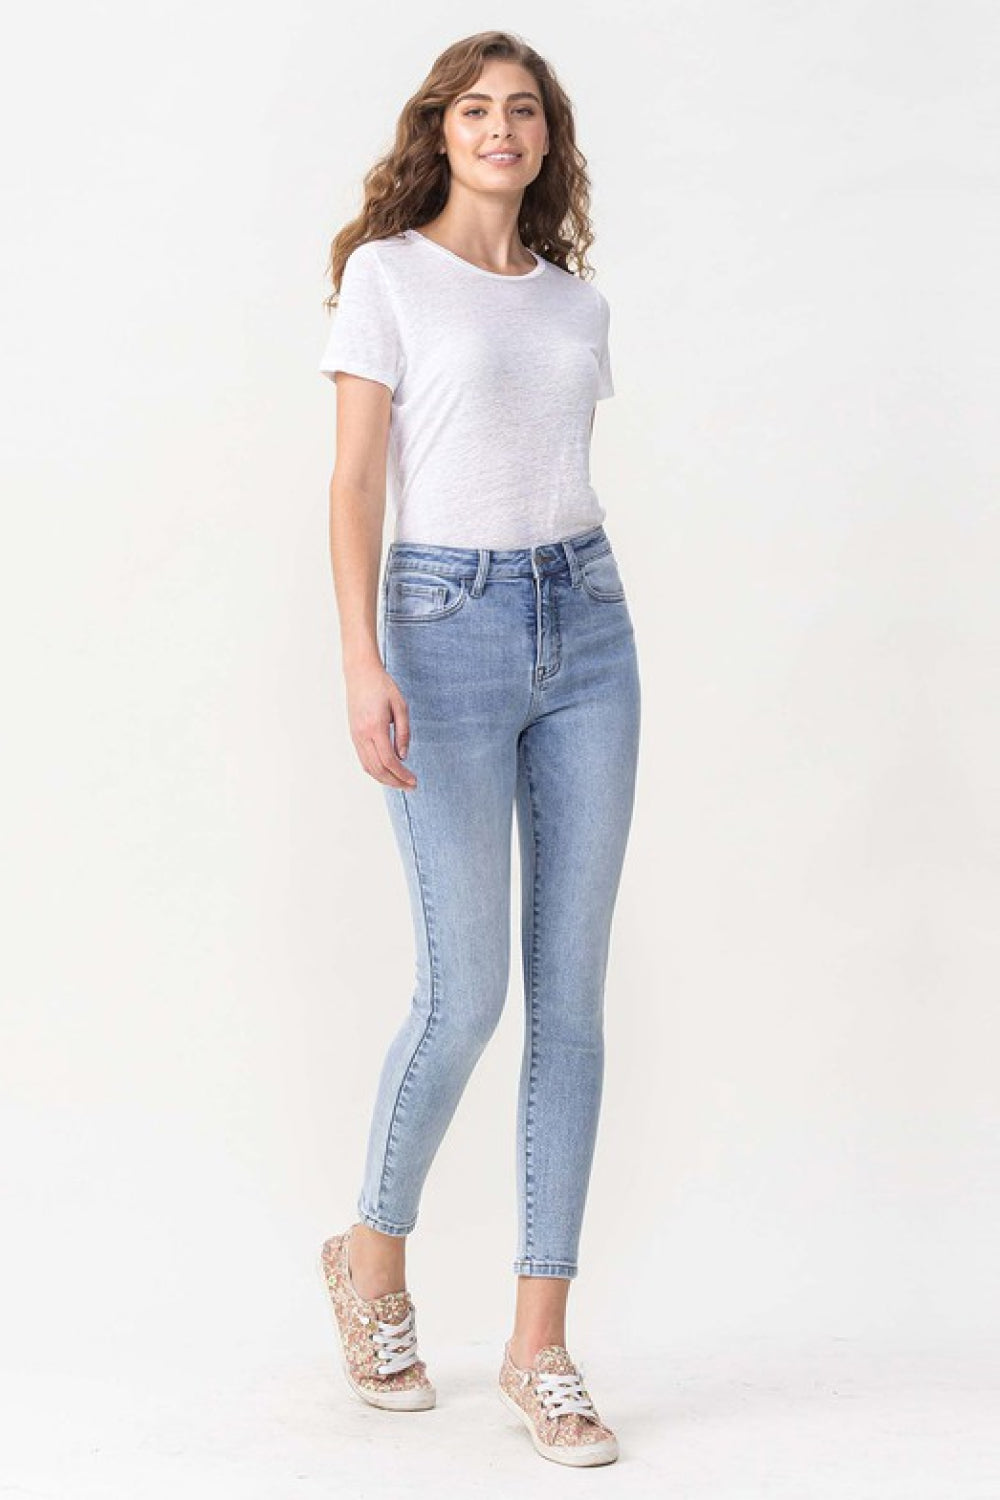 Lovervet Full Size Talia High Rise Crop Skinny Jeans - Make'm Blush Boutique 